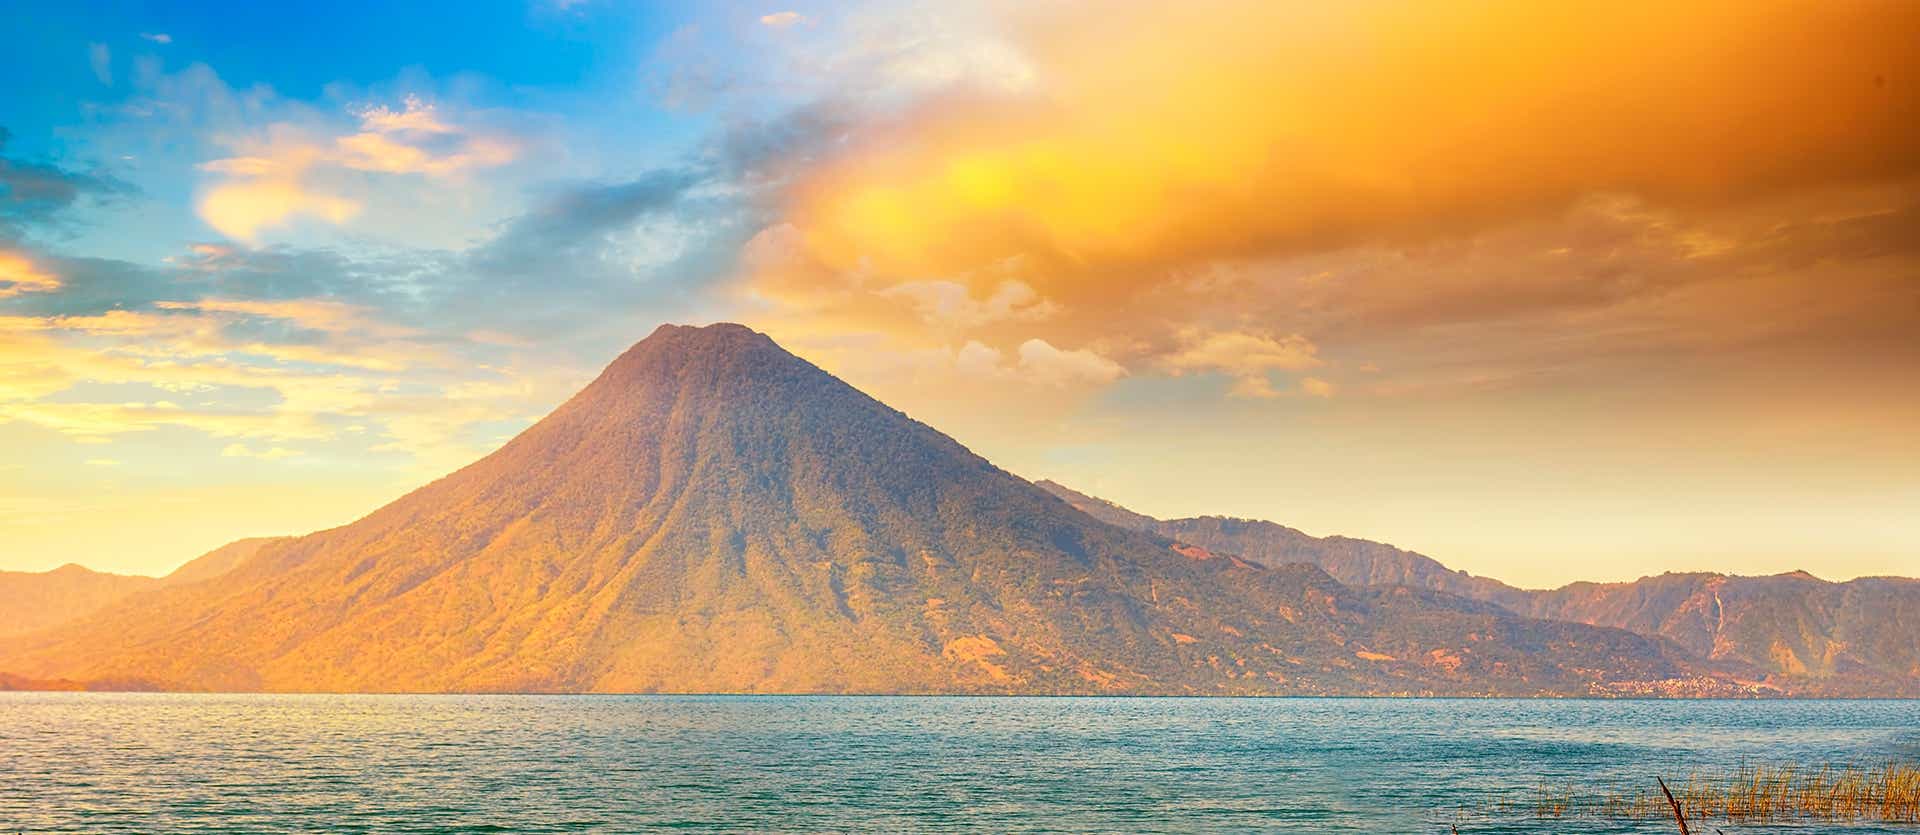 Toliman Volcano <span class="iconos separador"></span> Lake Atitlan <span class="iconos separador"></span> Guatemala